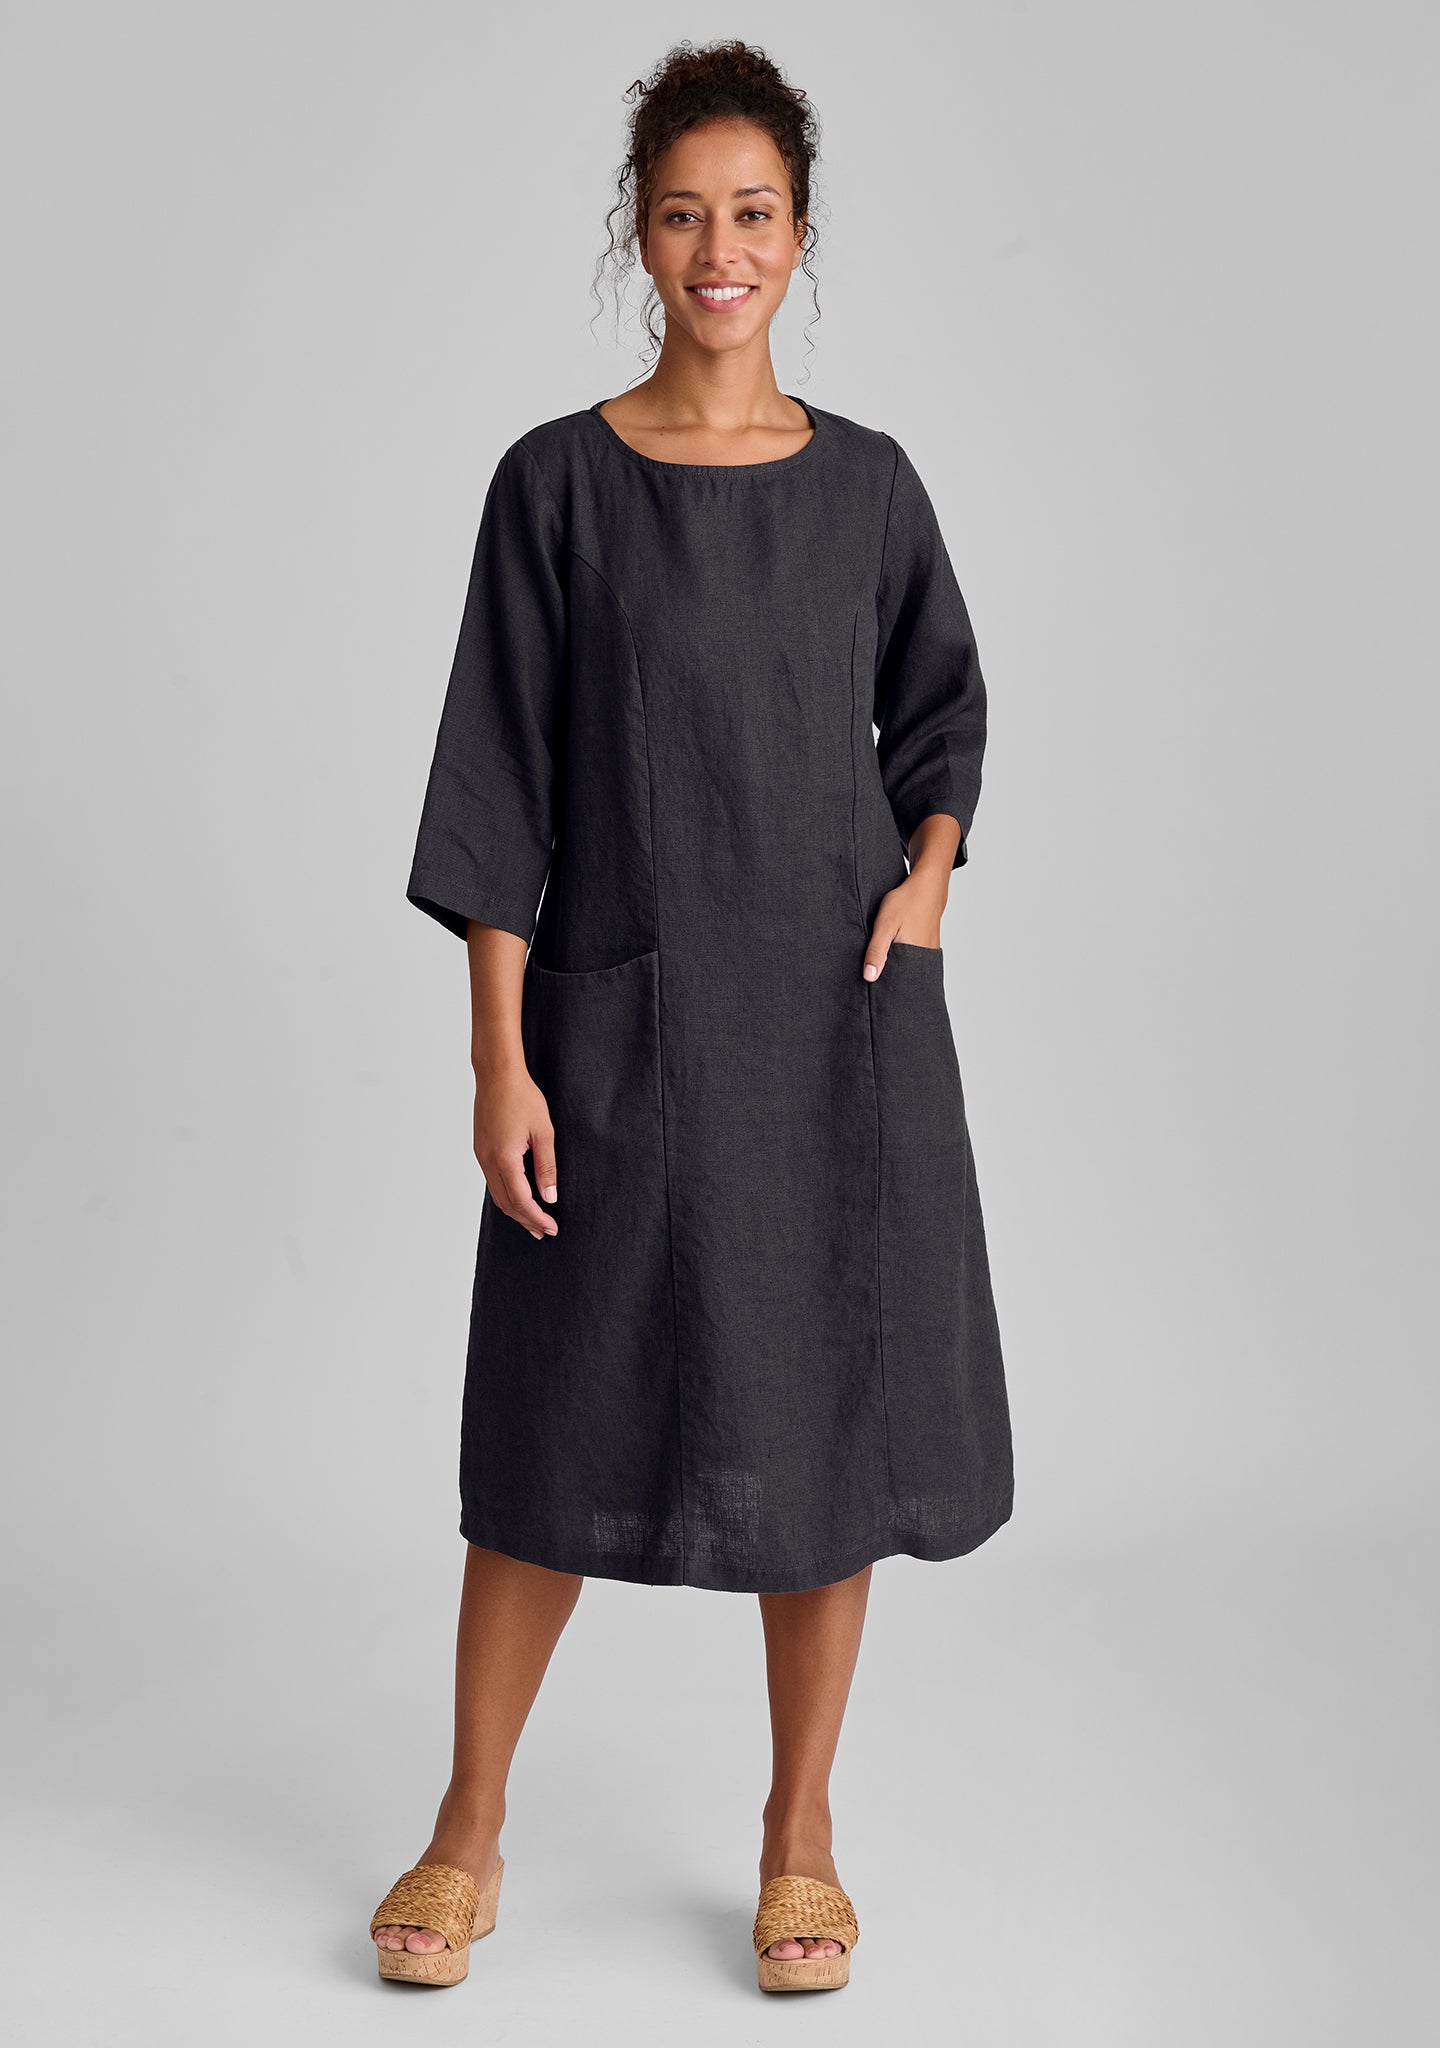 FLAX Core & Core Companions 2024 Outfits - A Capsule Linen Wardrobe